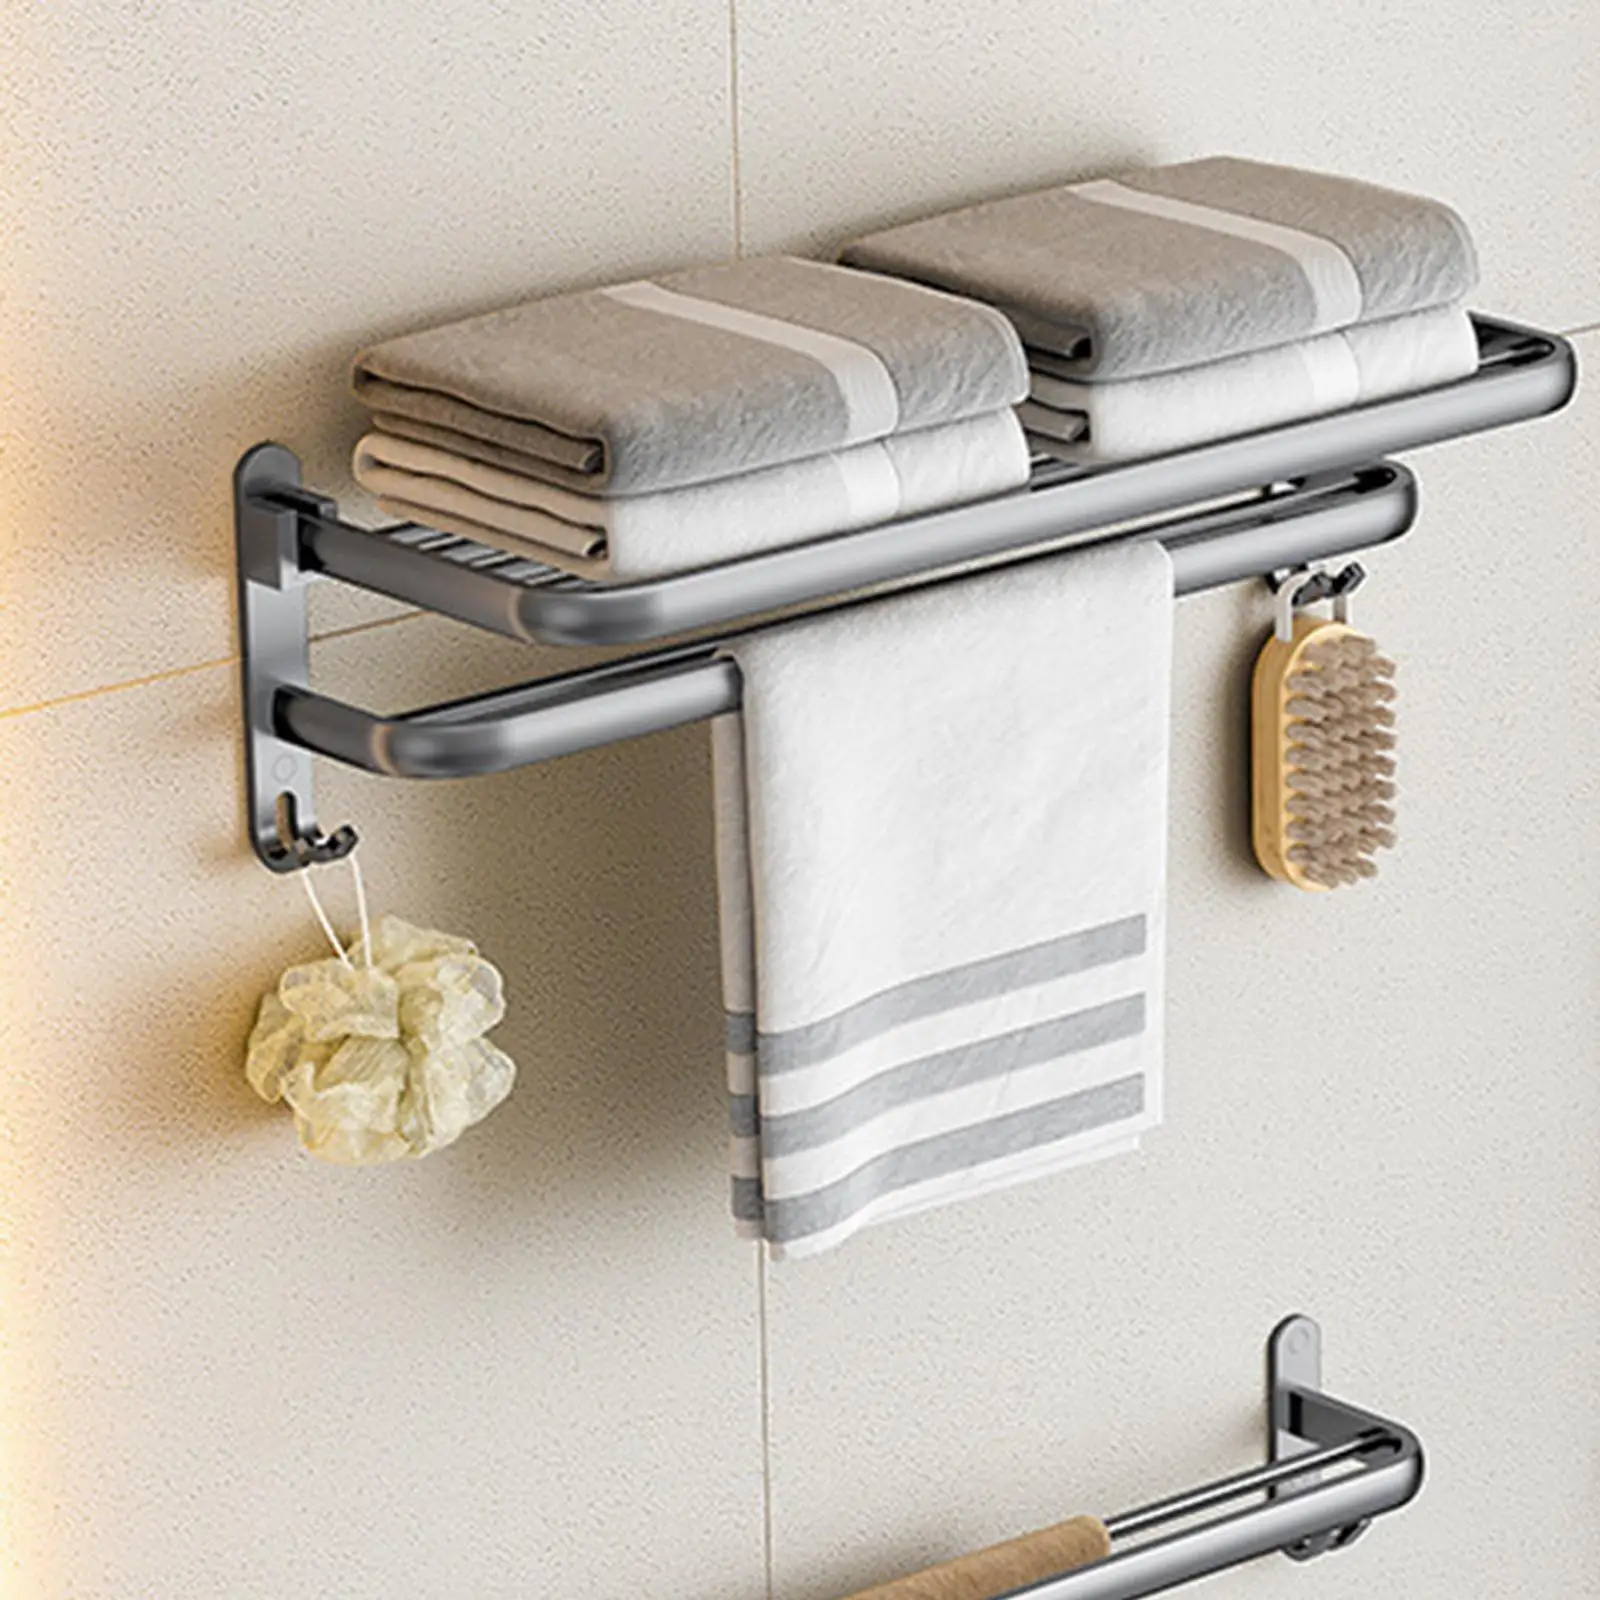 Wall Mount Bathroom Towel Rack Drying Bath Robe Towel Bar Holder for Balcony